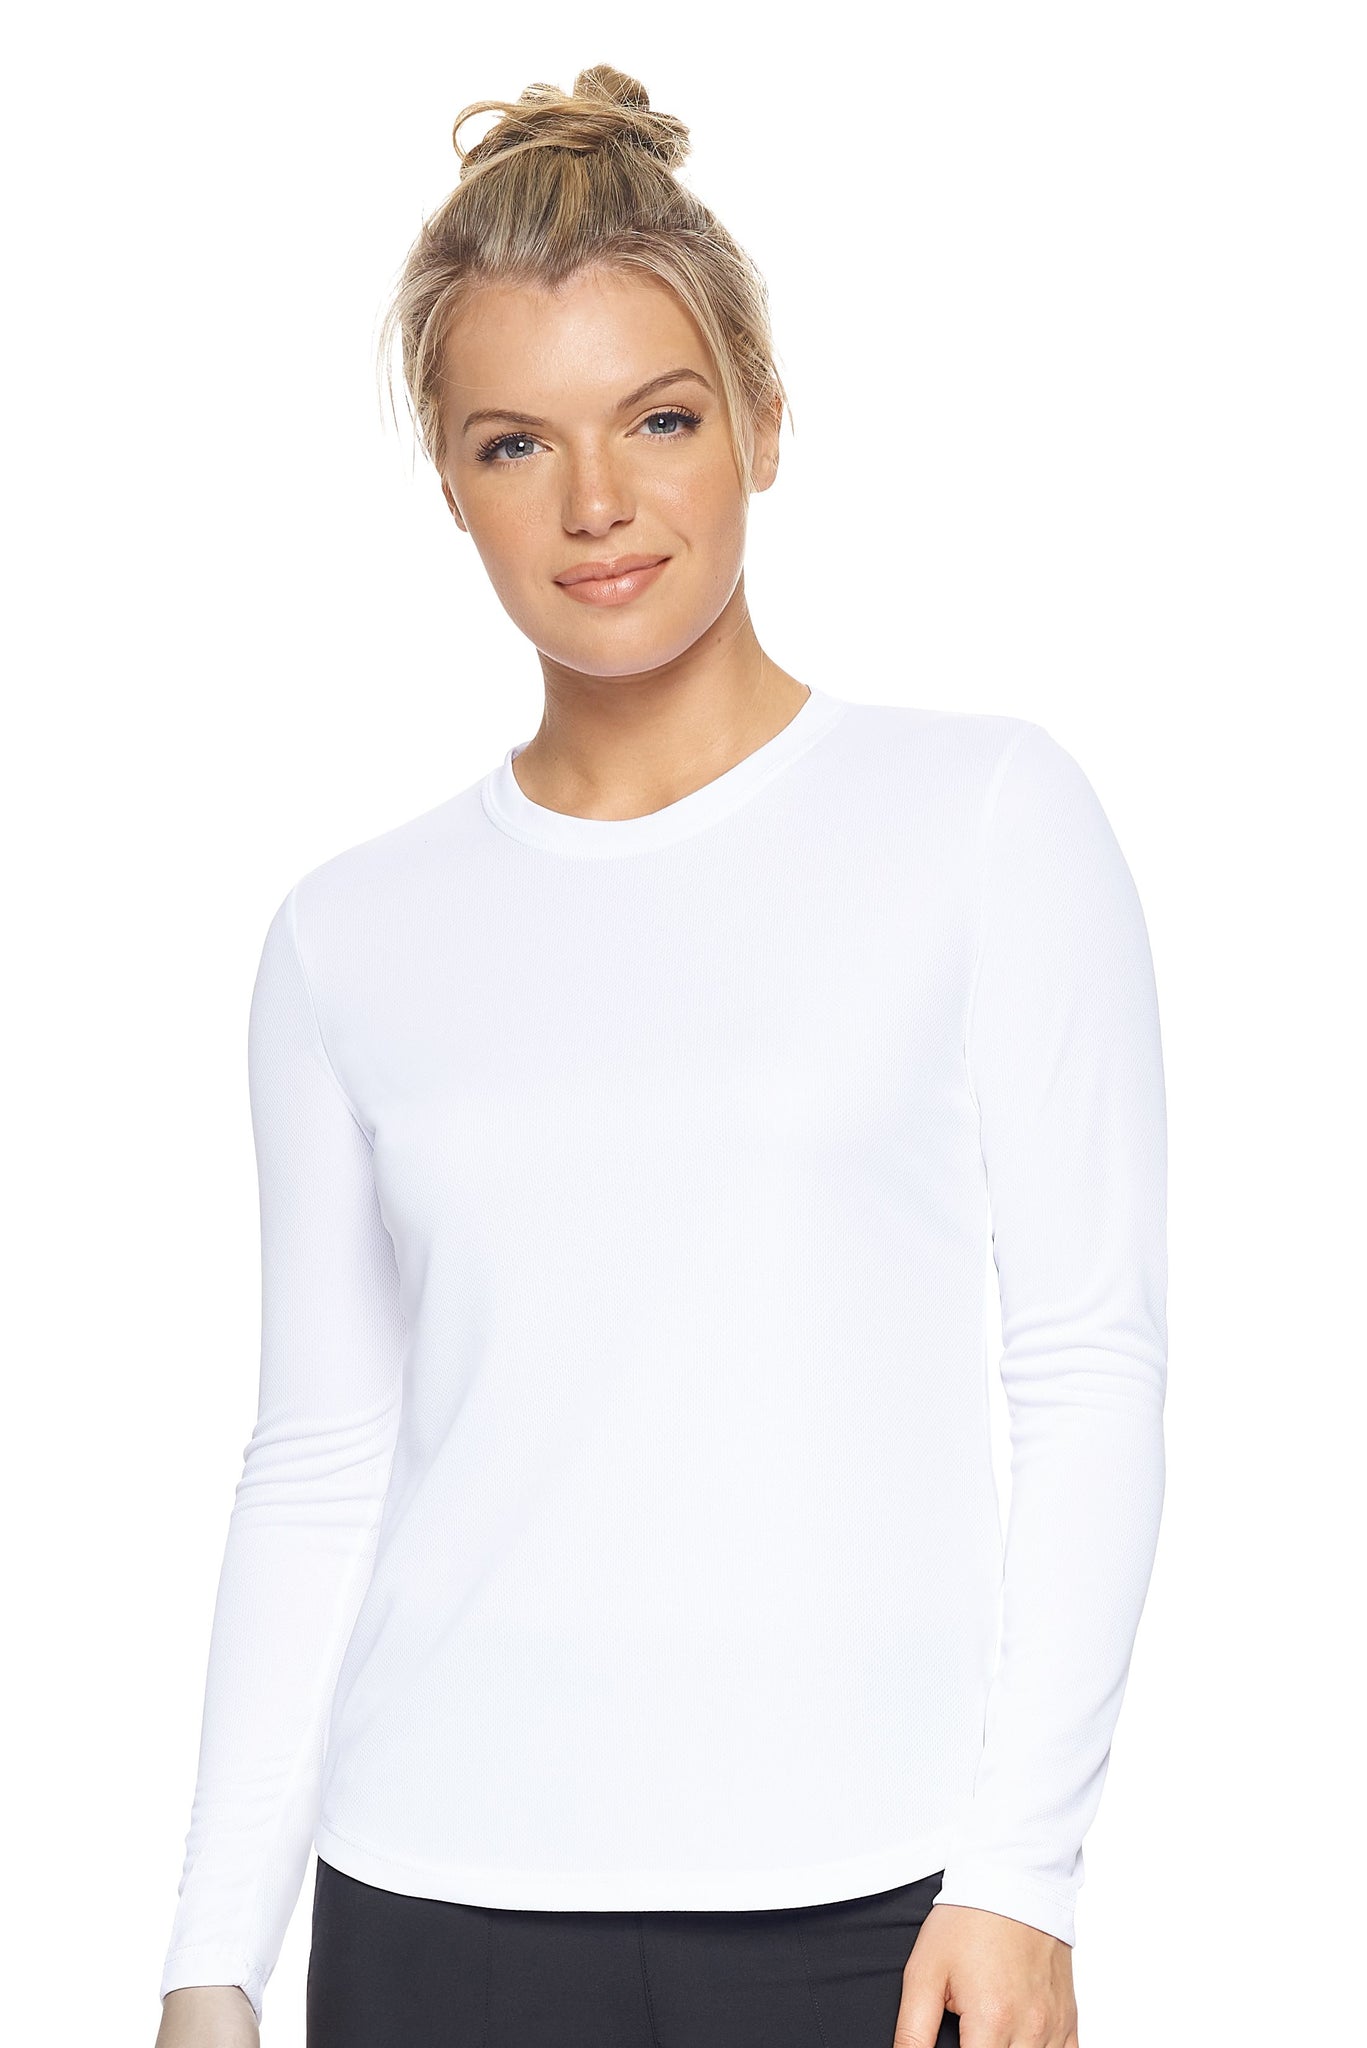 Expert Brand Wholesale Women's Oxymesh™ Long Sleeve Tec Tee in white#white